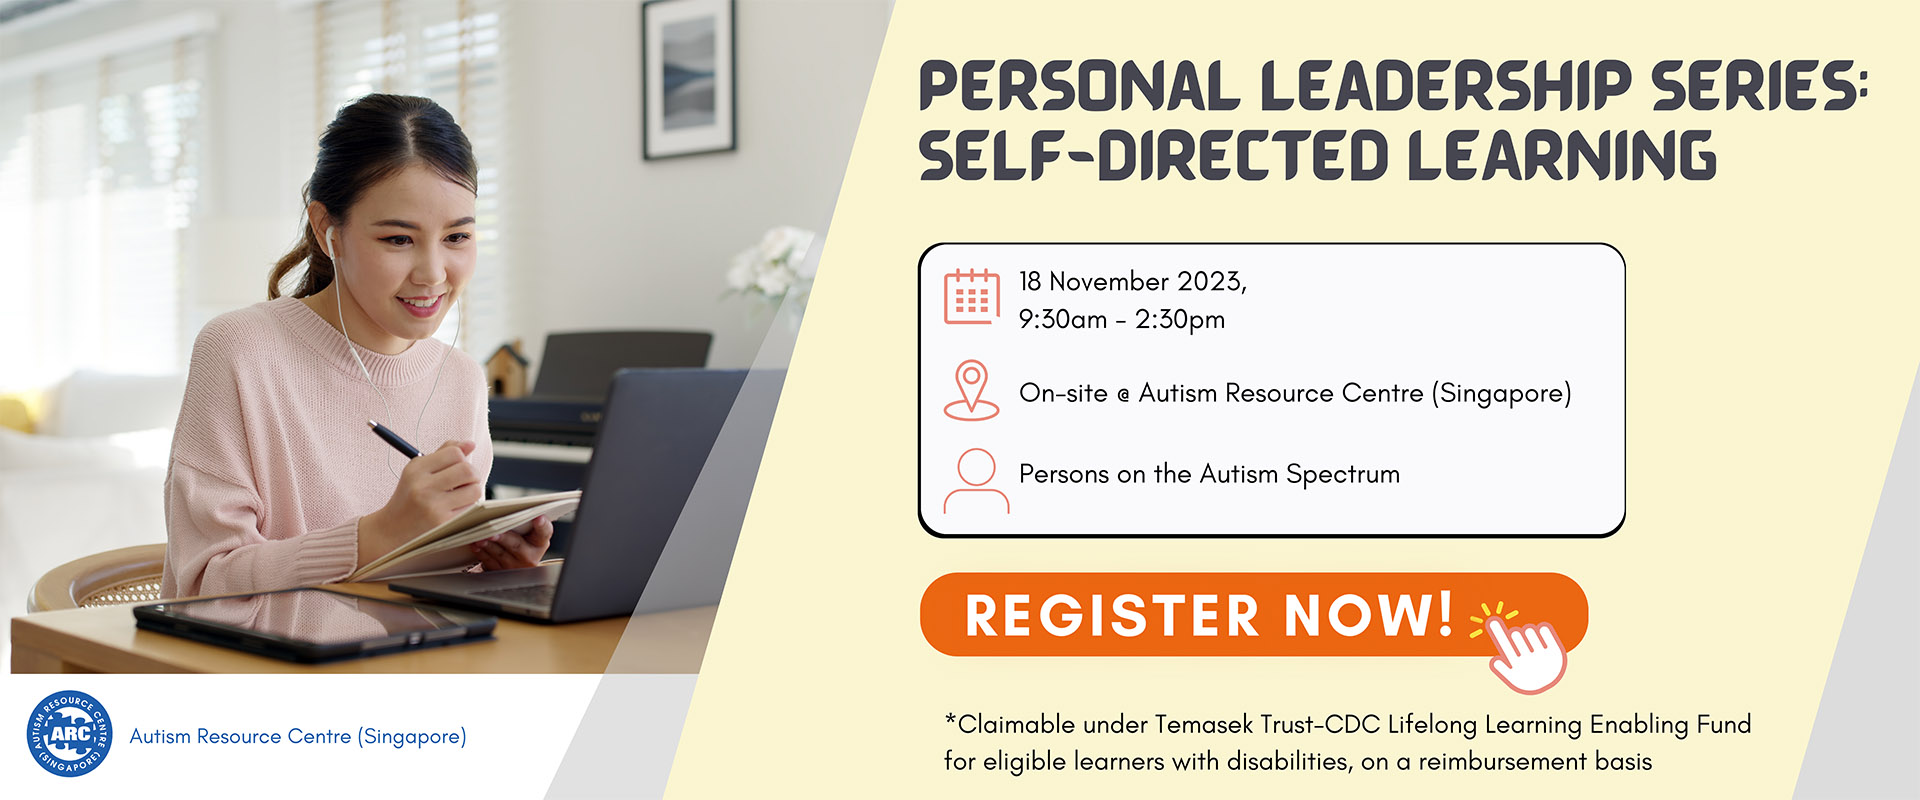 Personal Leadership Series: Self-Directed Learning